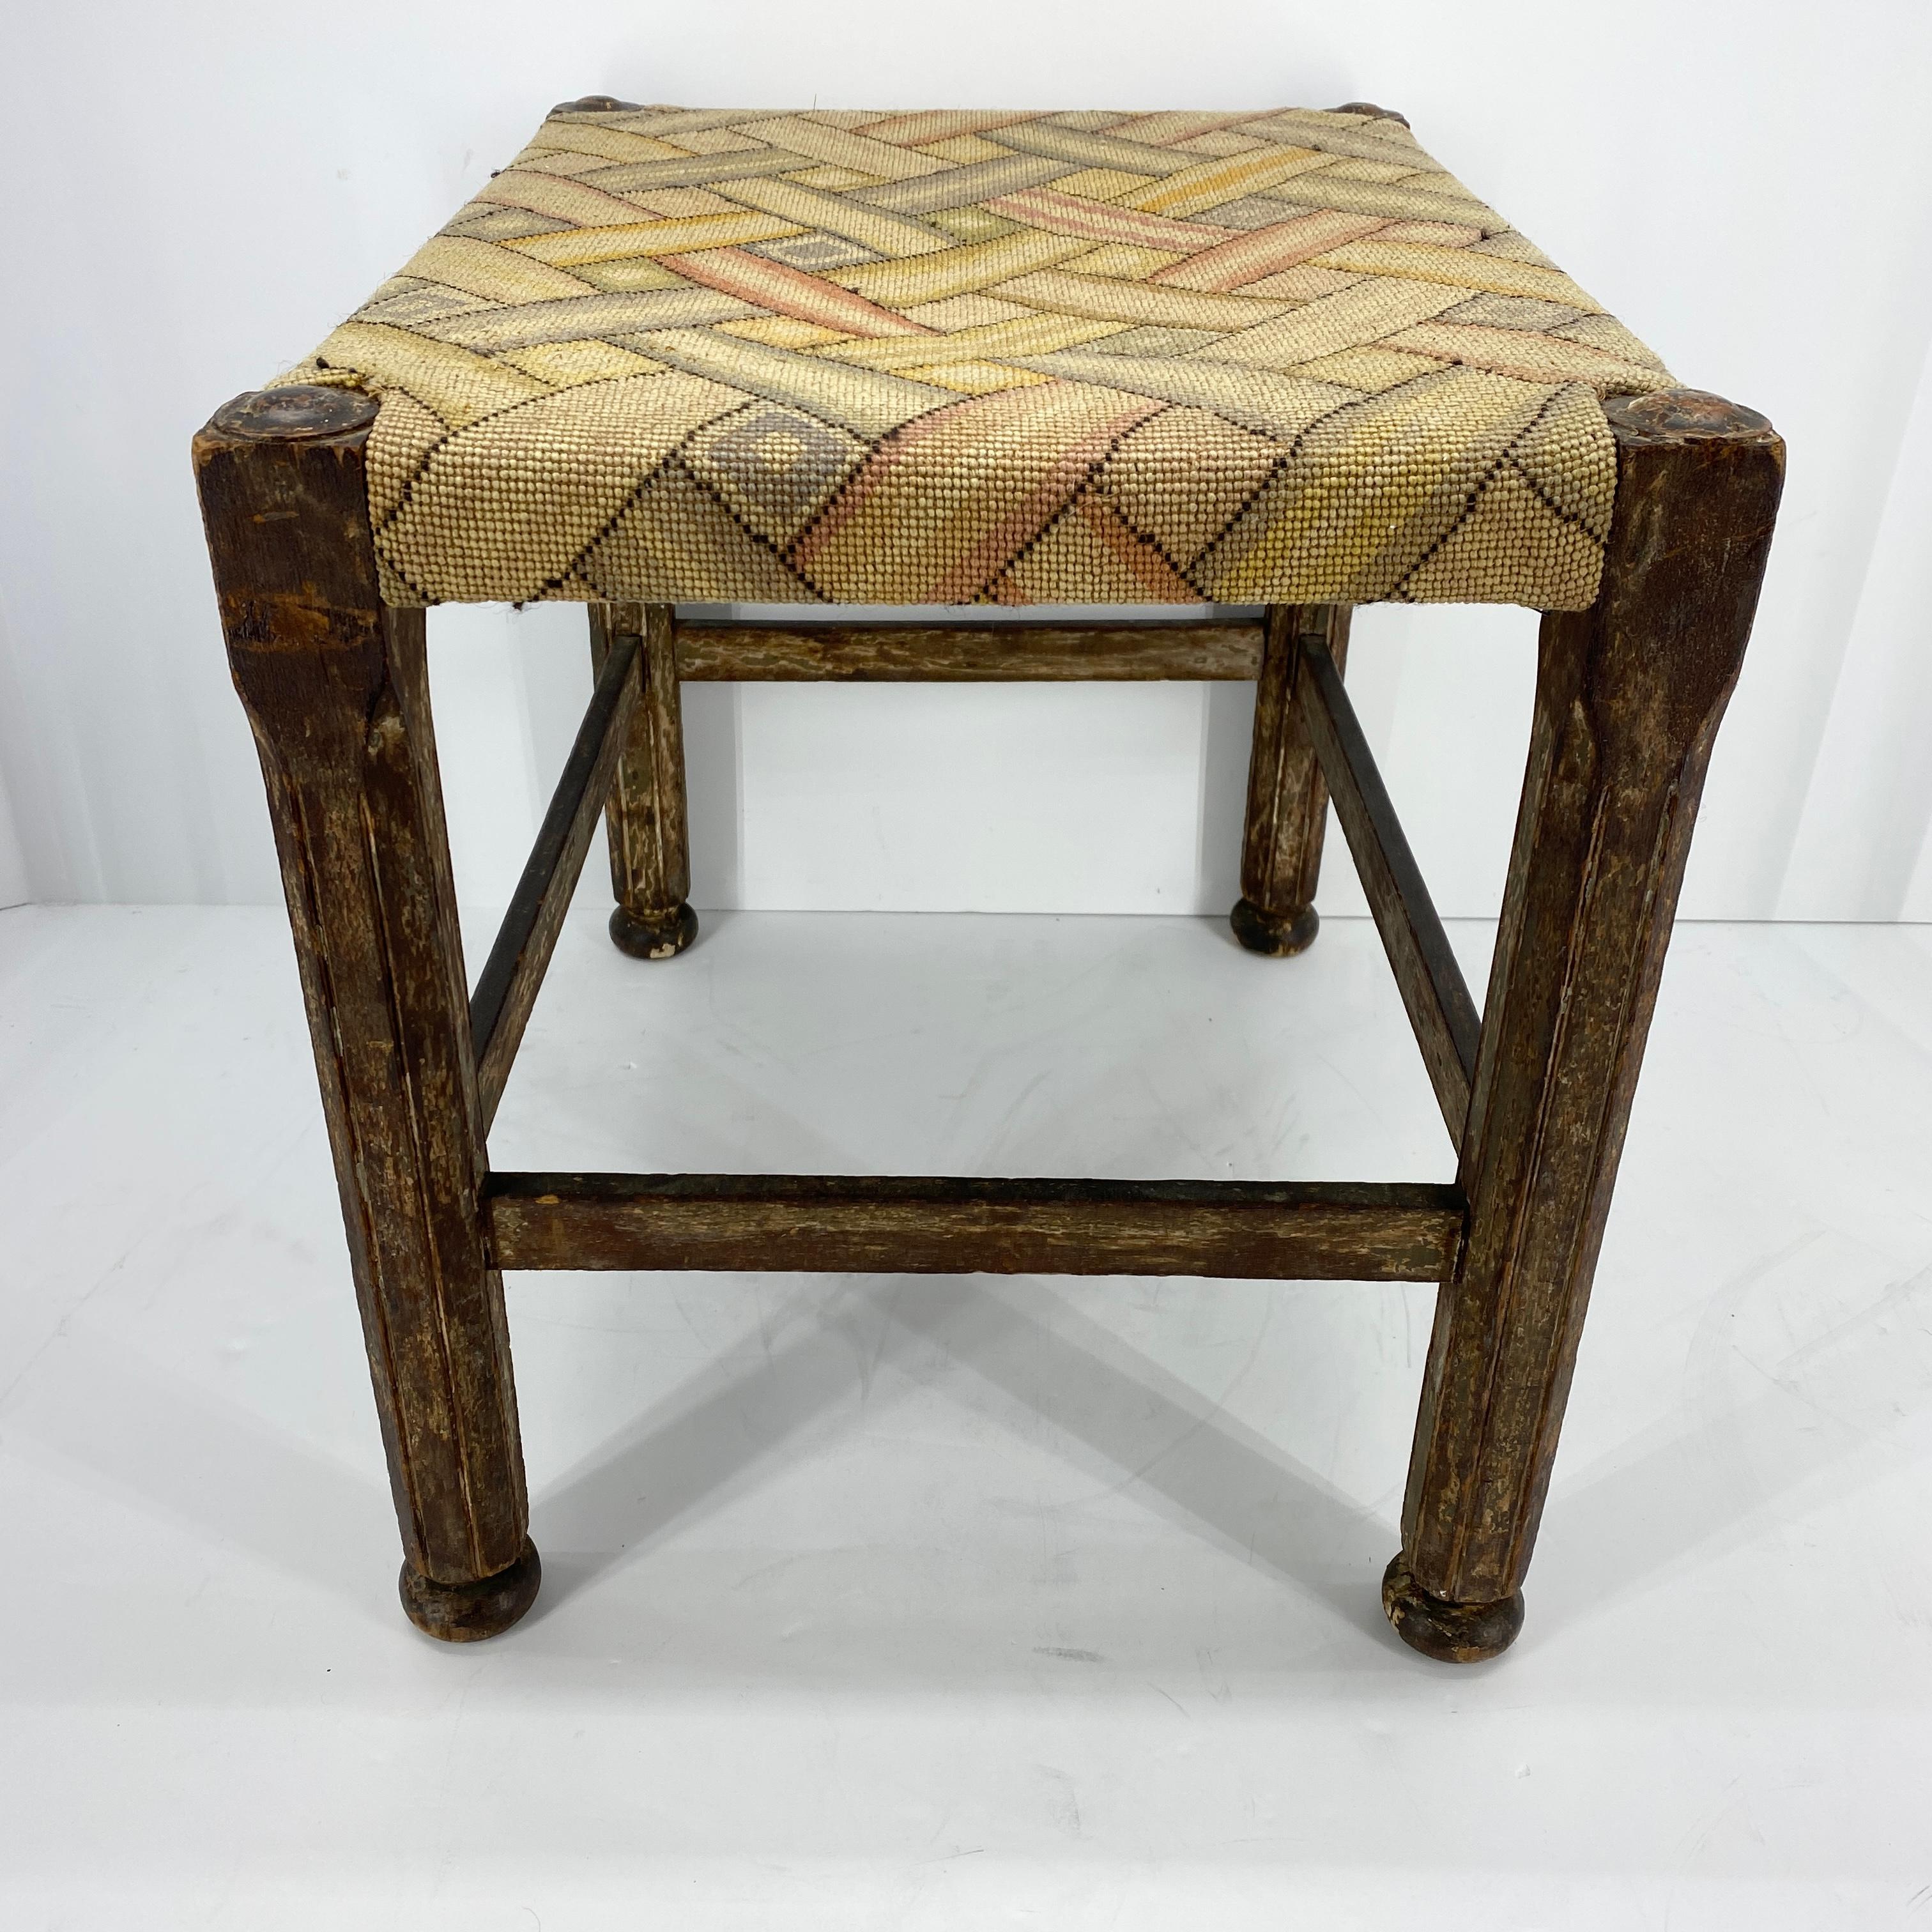 Wood Folk Art Footstool with Woven Seat